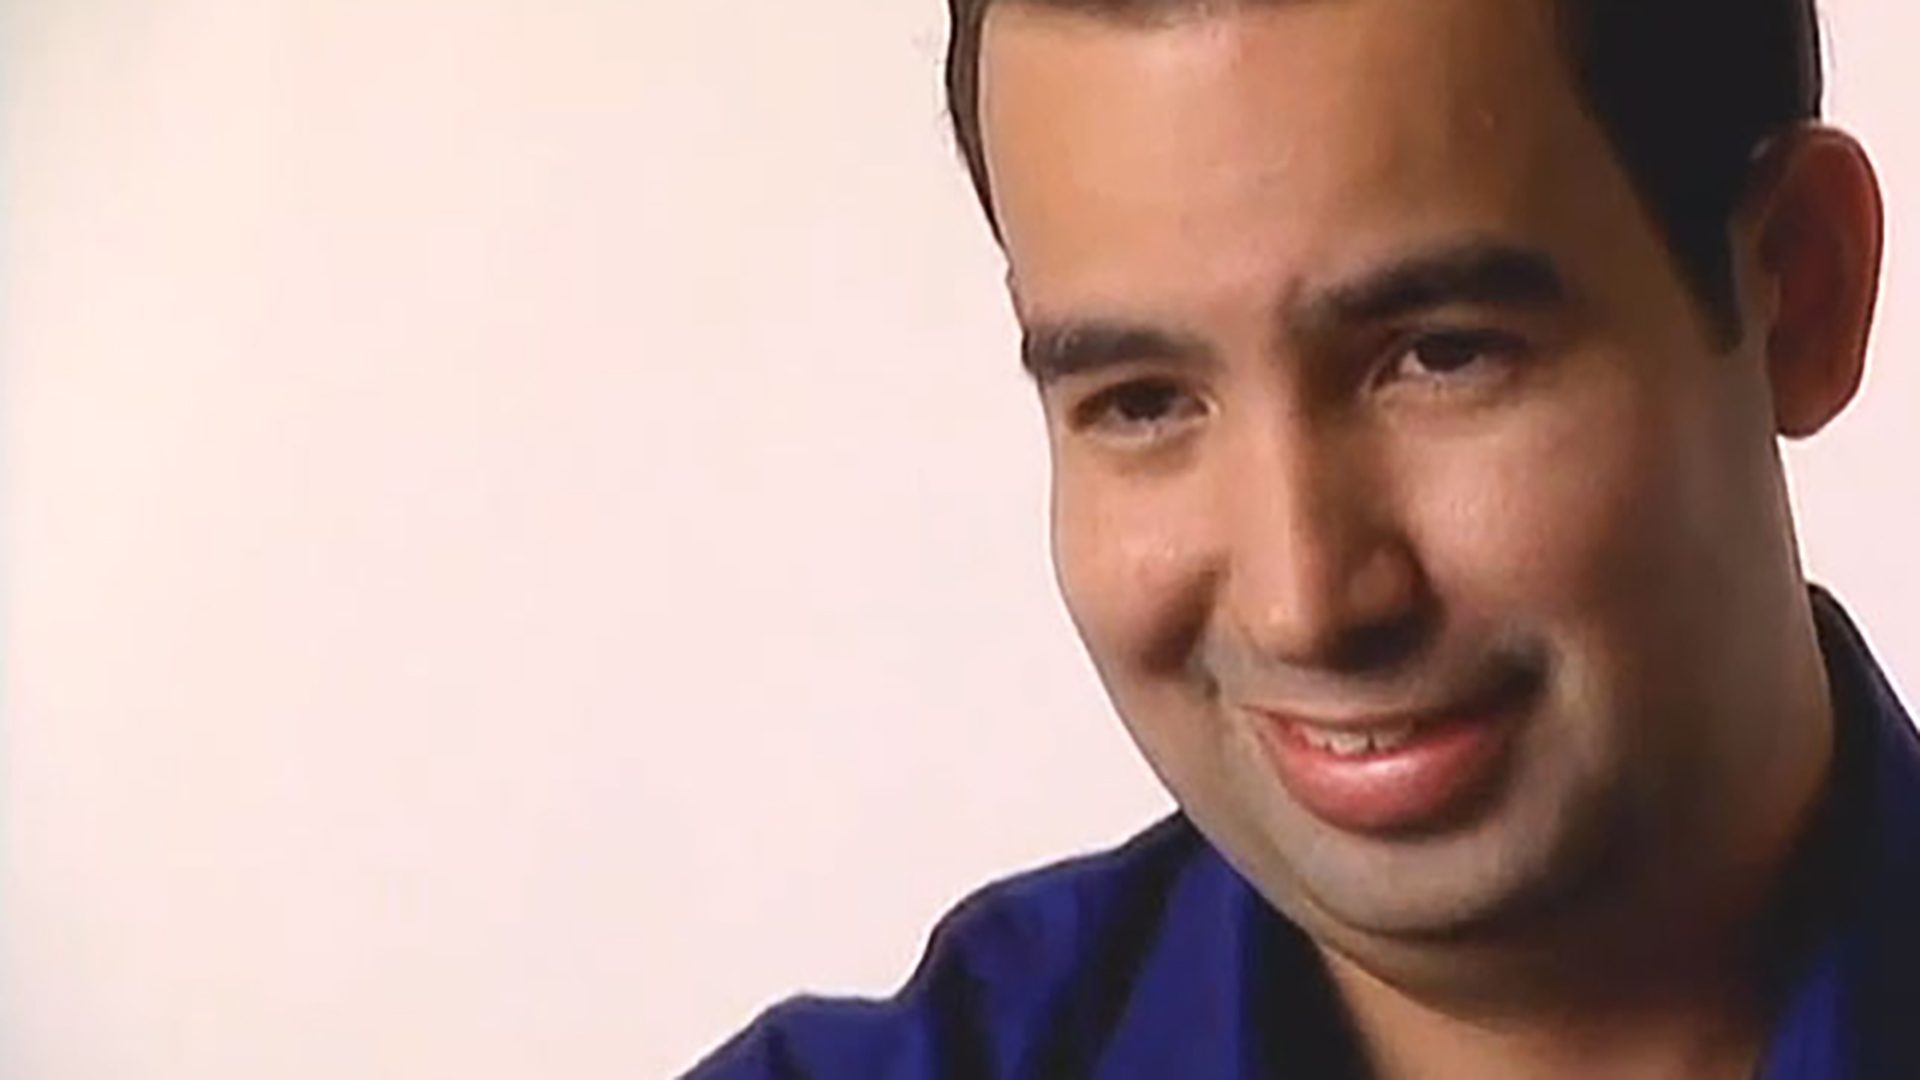 A close-up portrait of a smiling man wearing a blue shirt